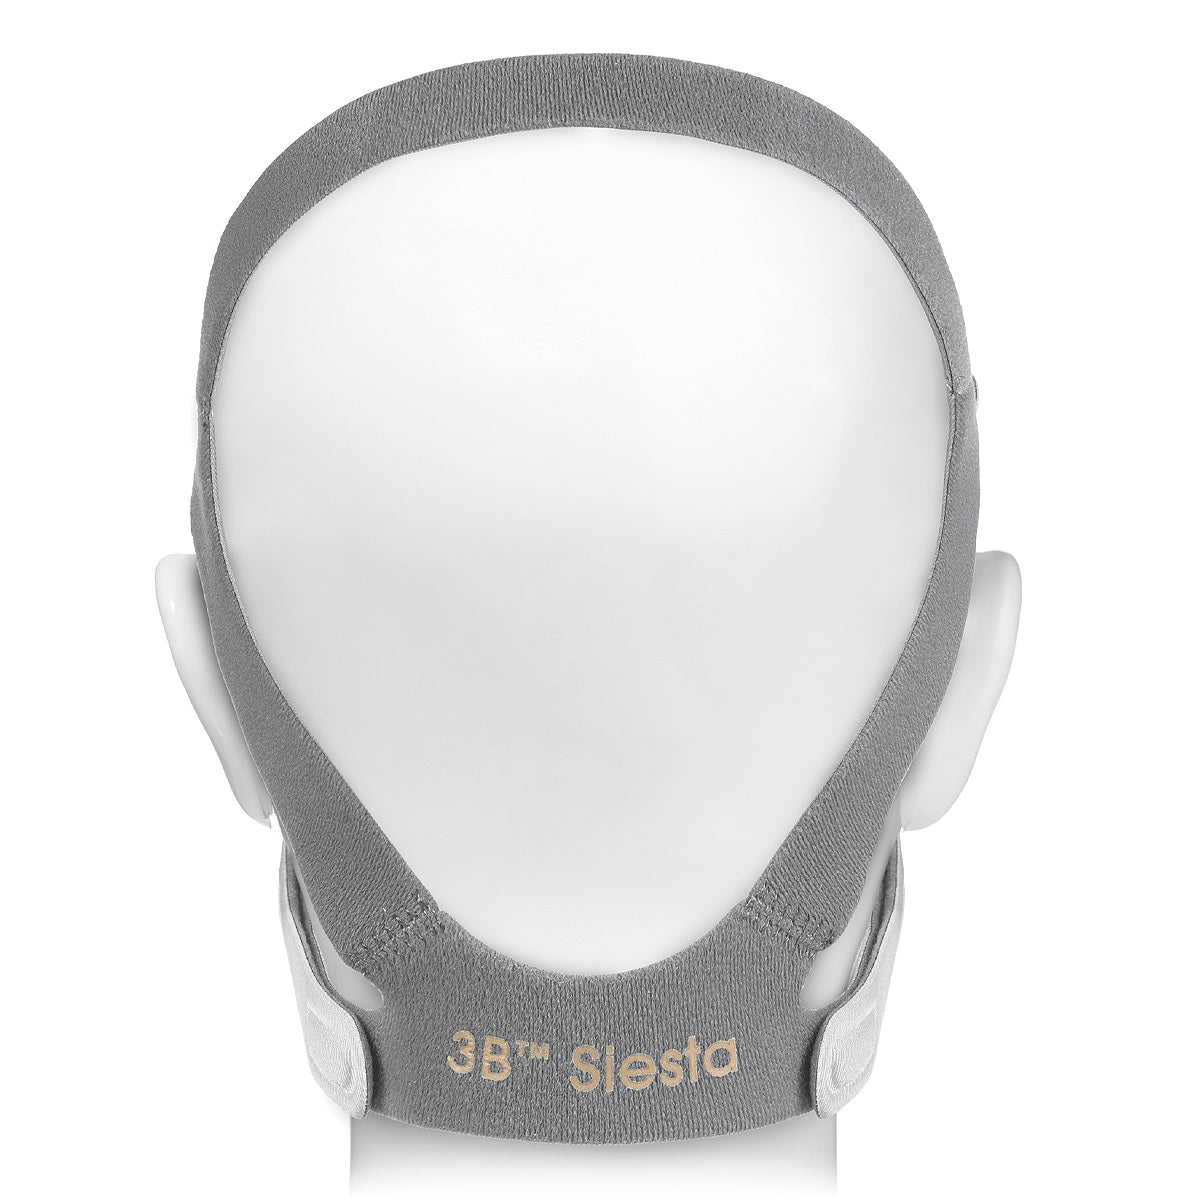 Headgear for Siesta Nasal CPAP/BiPAP Masks